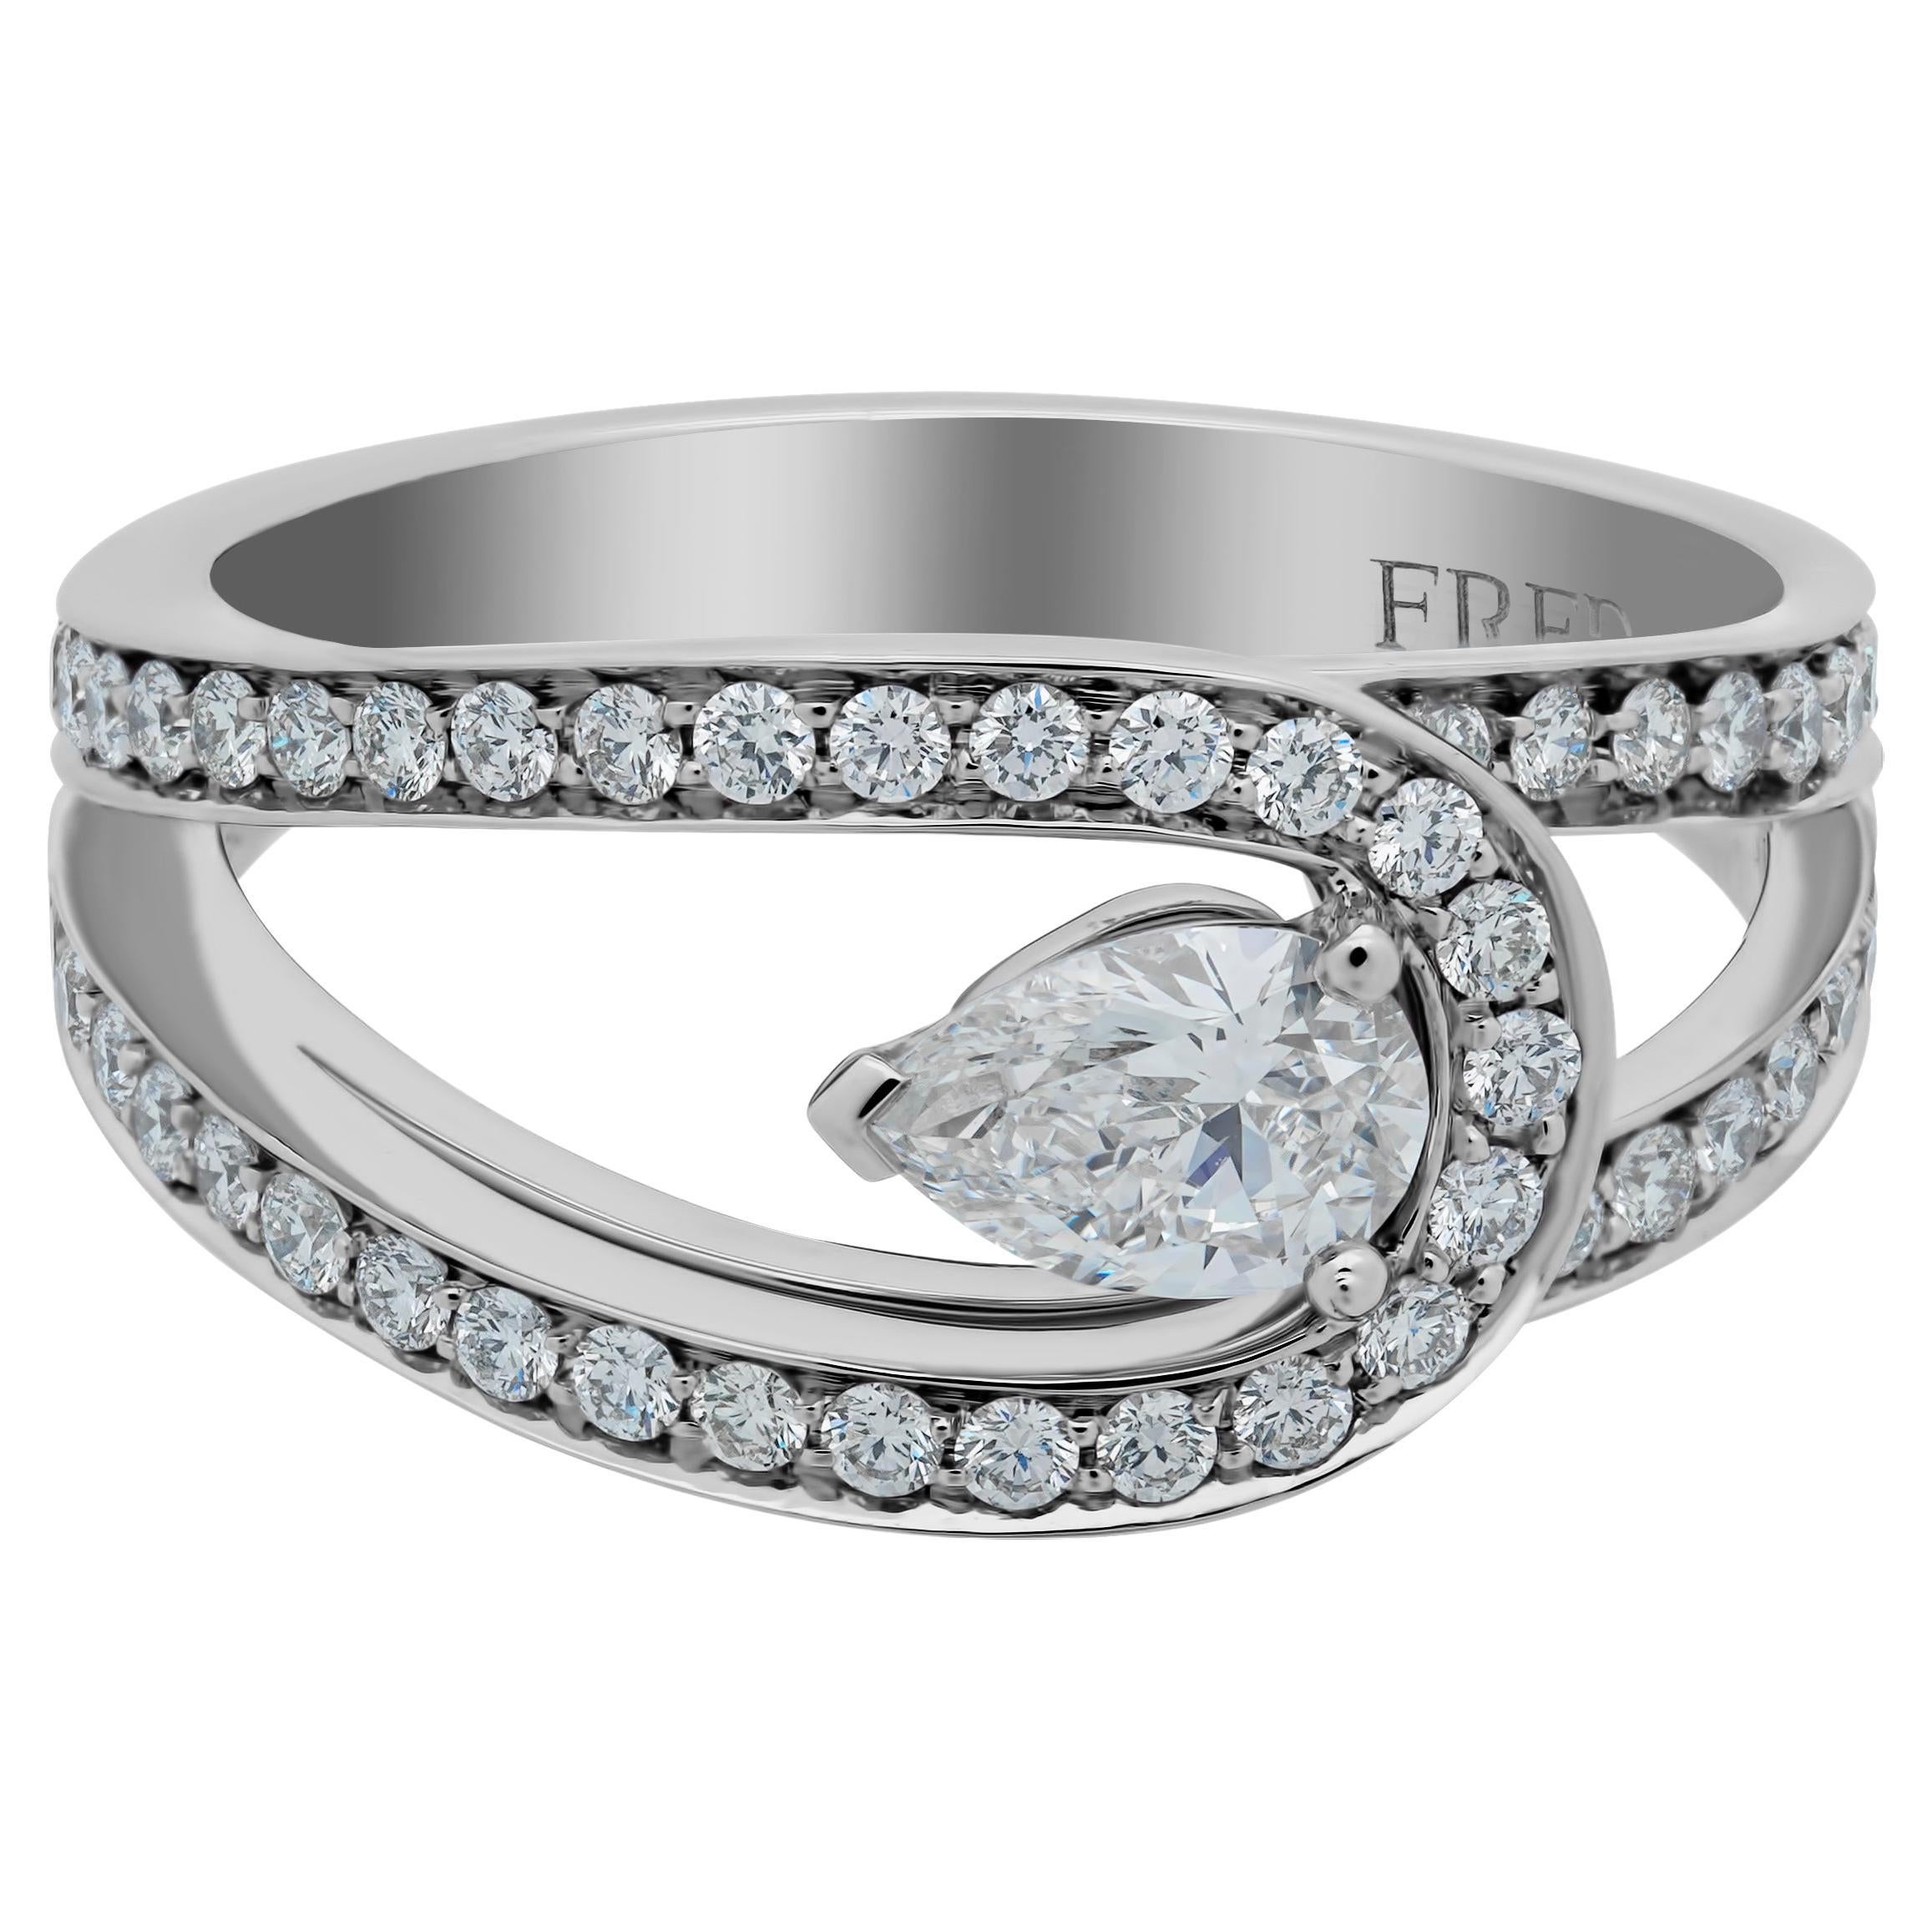 FRED Lovelight Platinum Pear Cut Center Diamond Engagement Ring sz 5.25